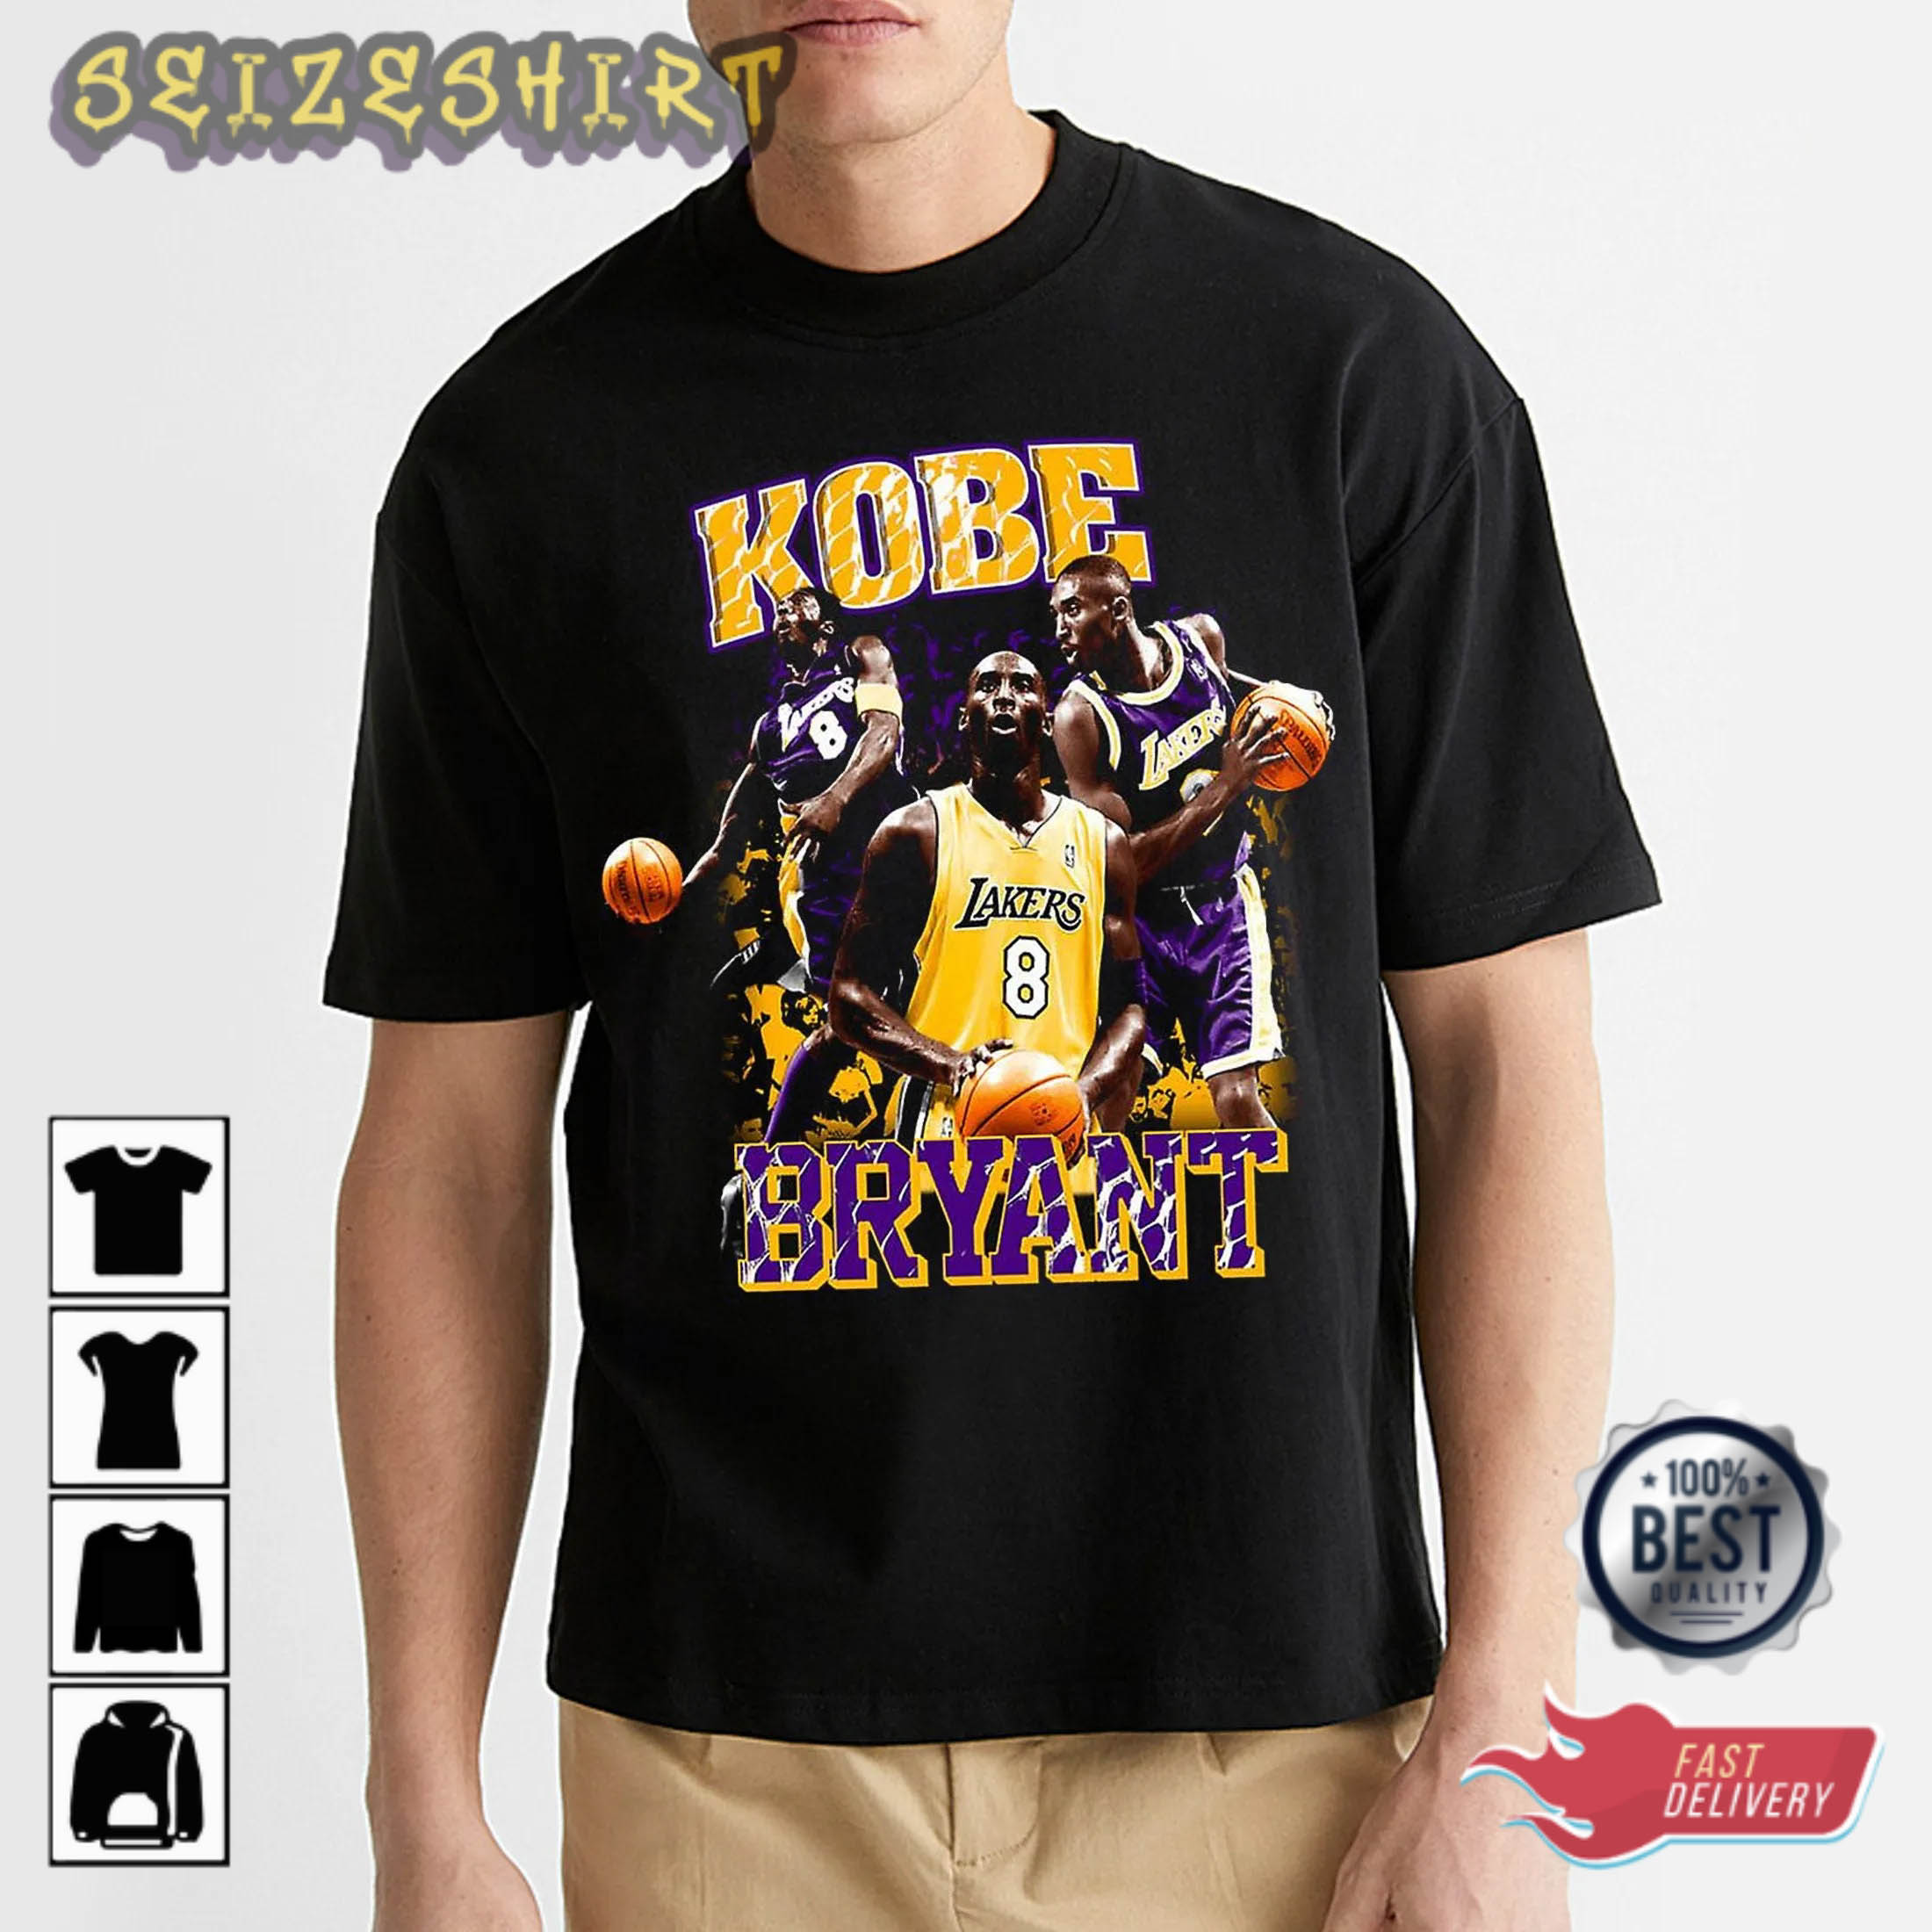 Kobe Bryant 90s Rest In Peace Retro Basketball Sports T-Shirt - Seizeshirt.com